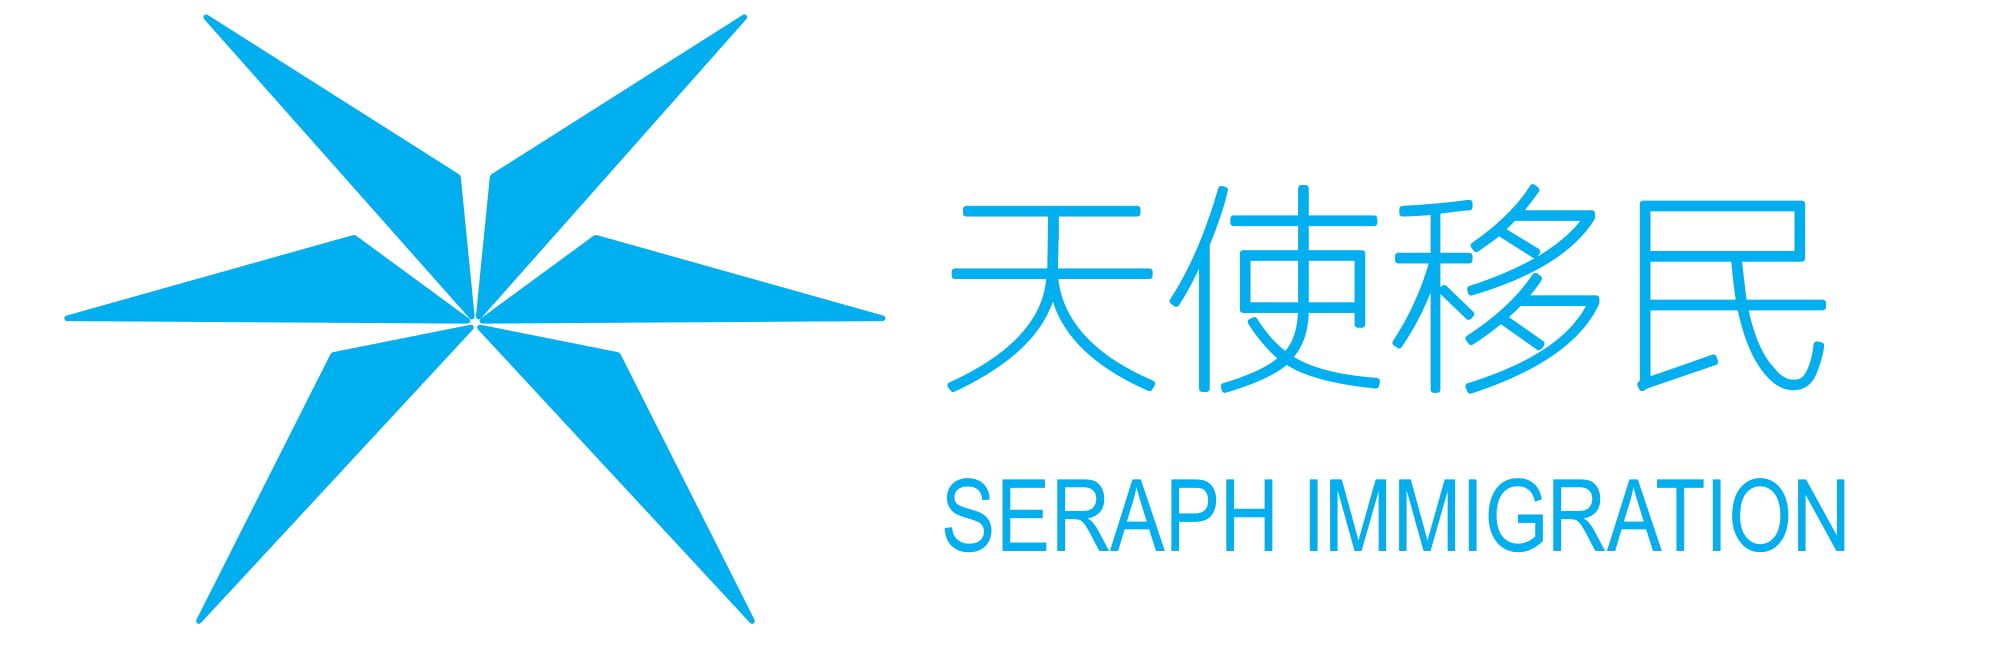 Seraph Immigration